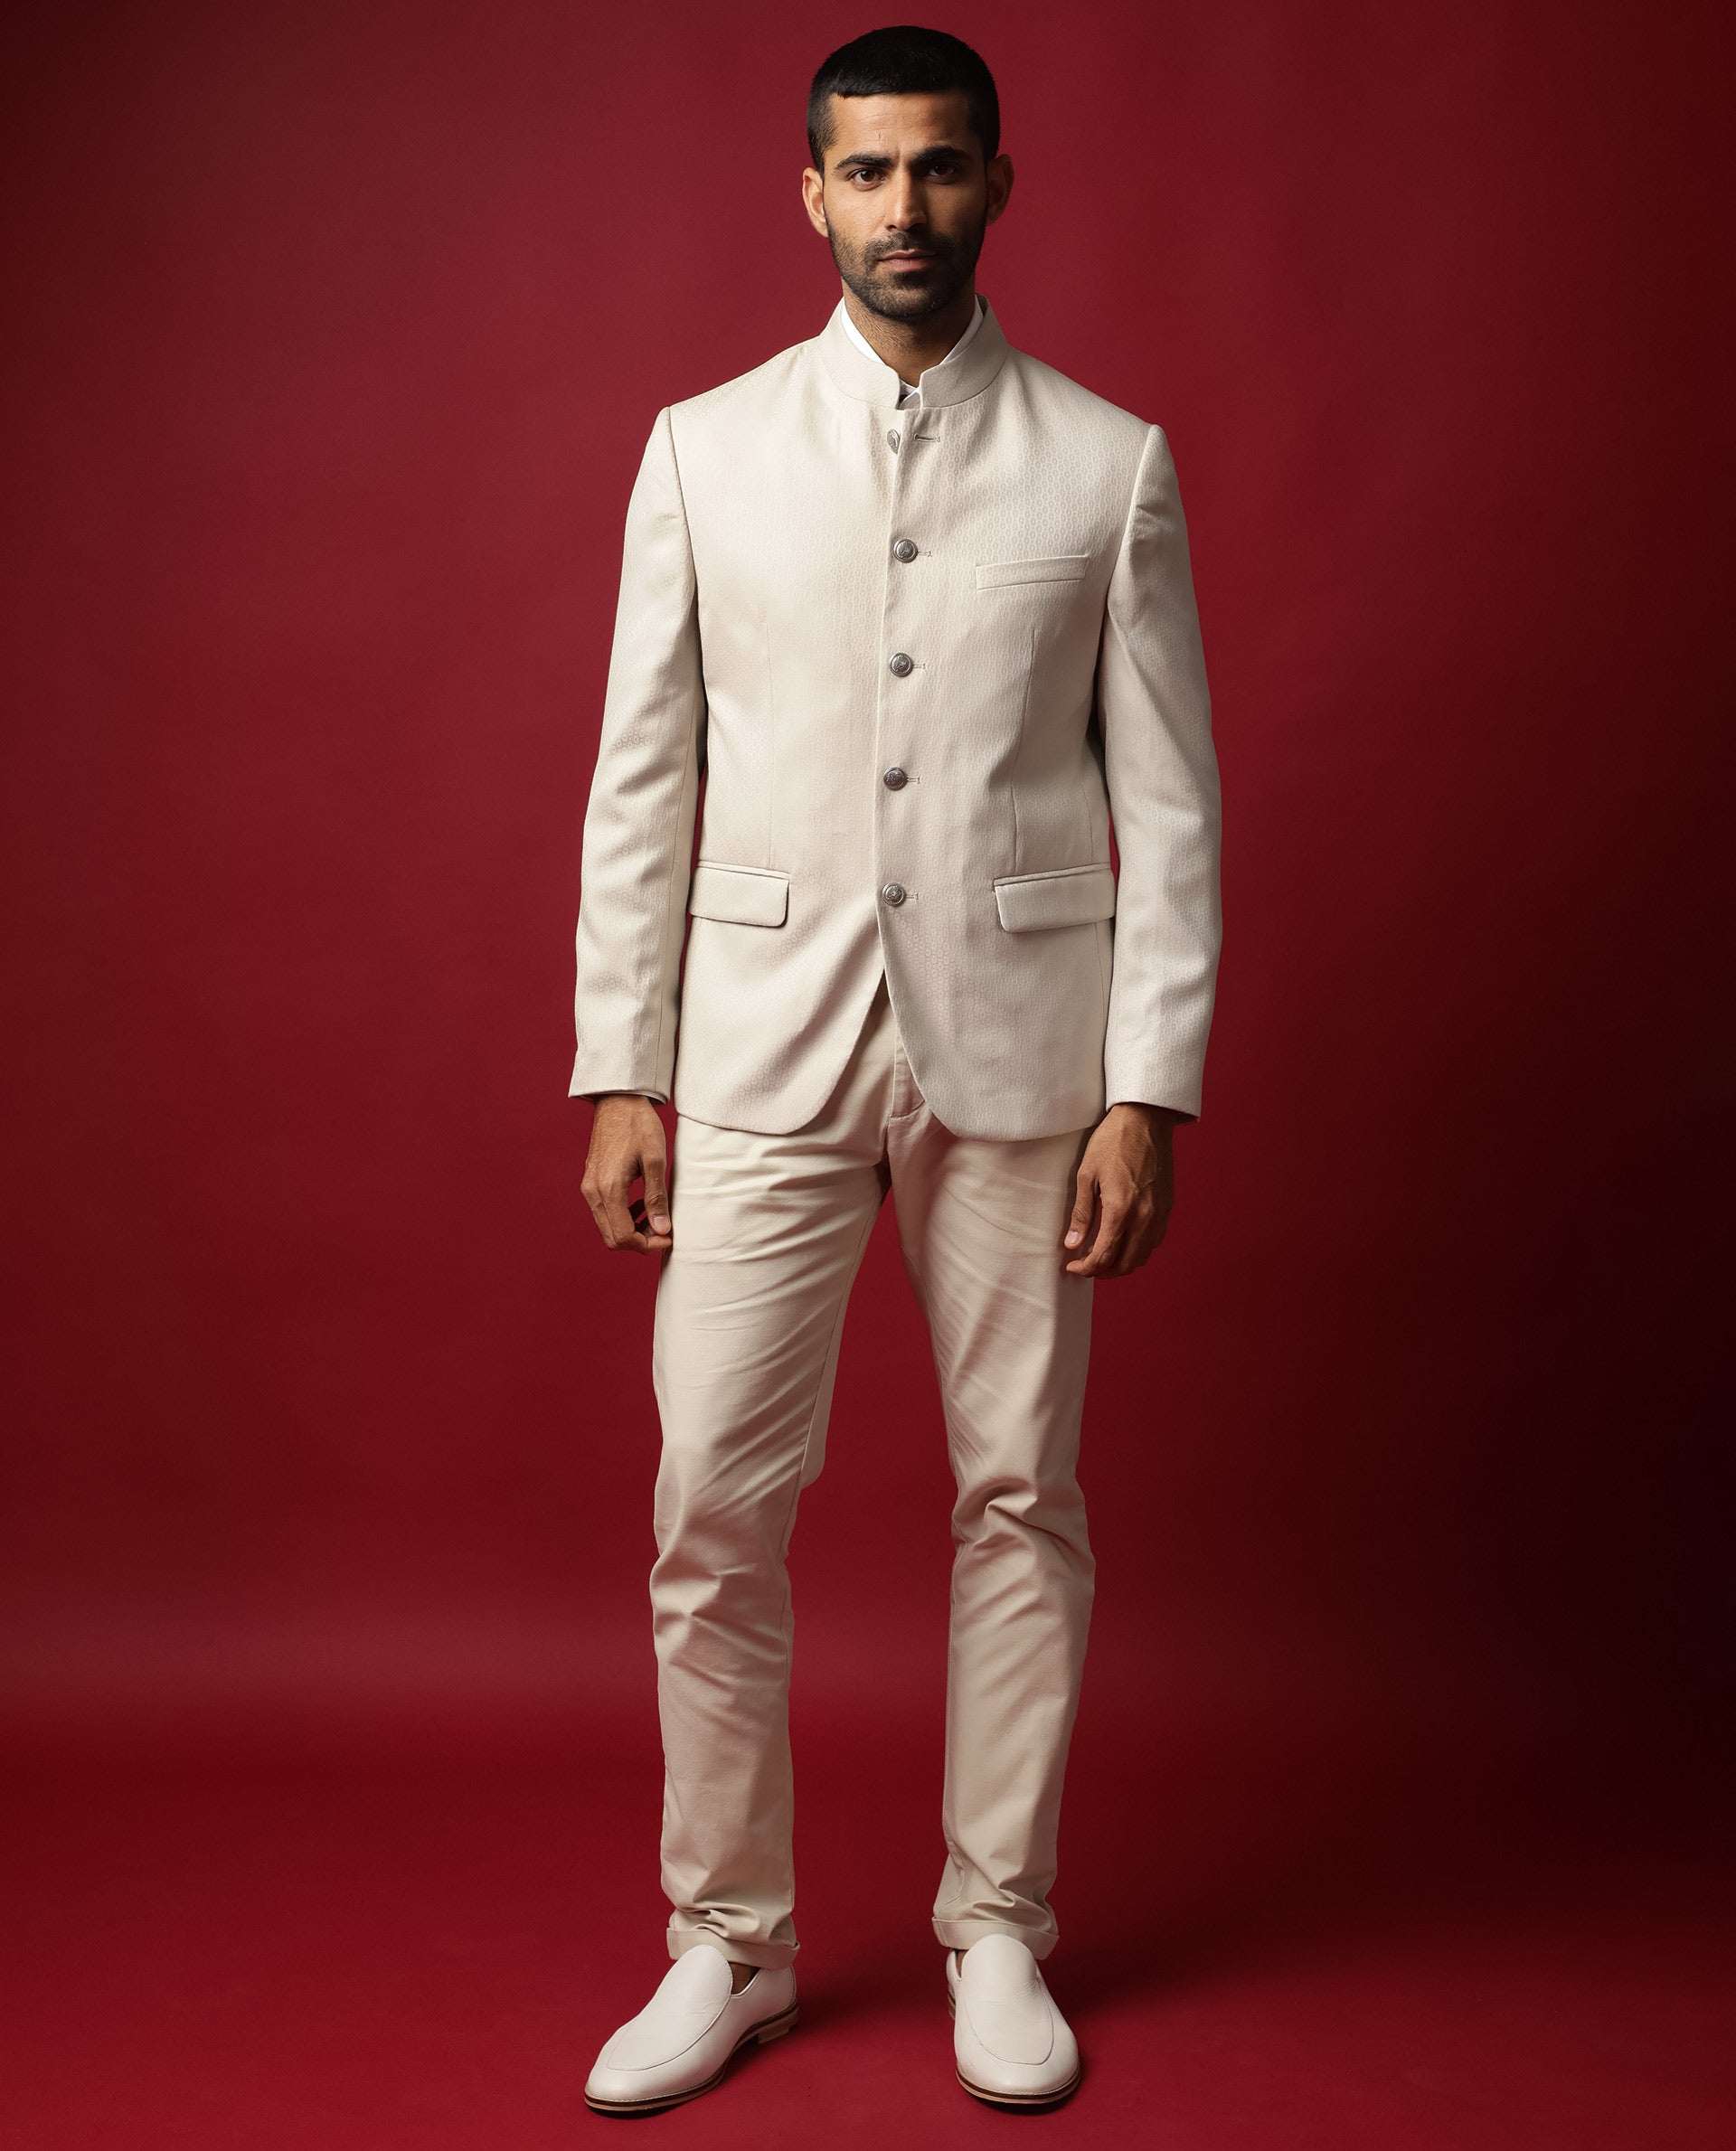 Royal Kurta Mens Polyviscose Bandhgala Formal Suit (38